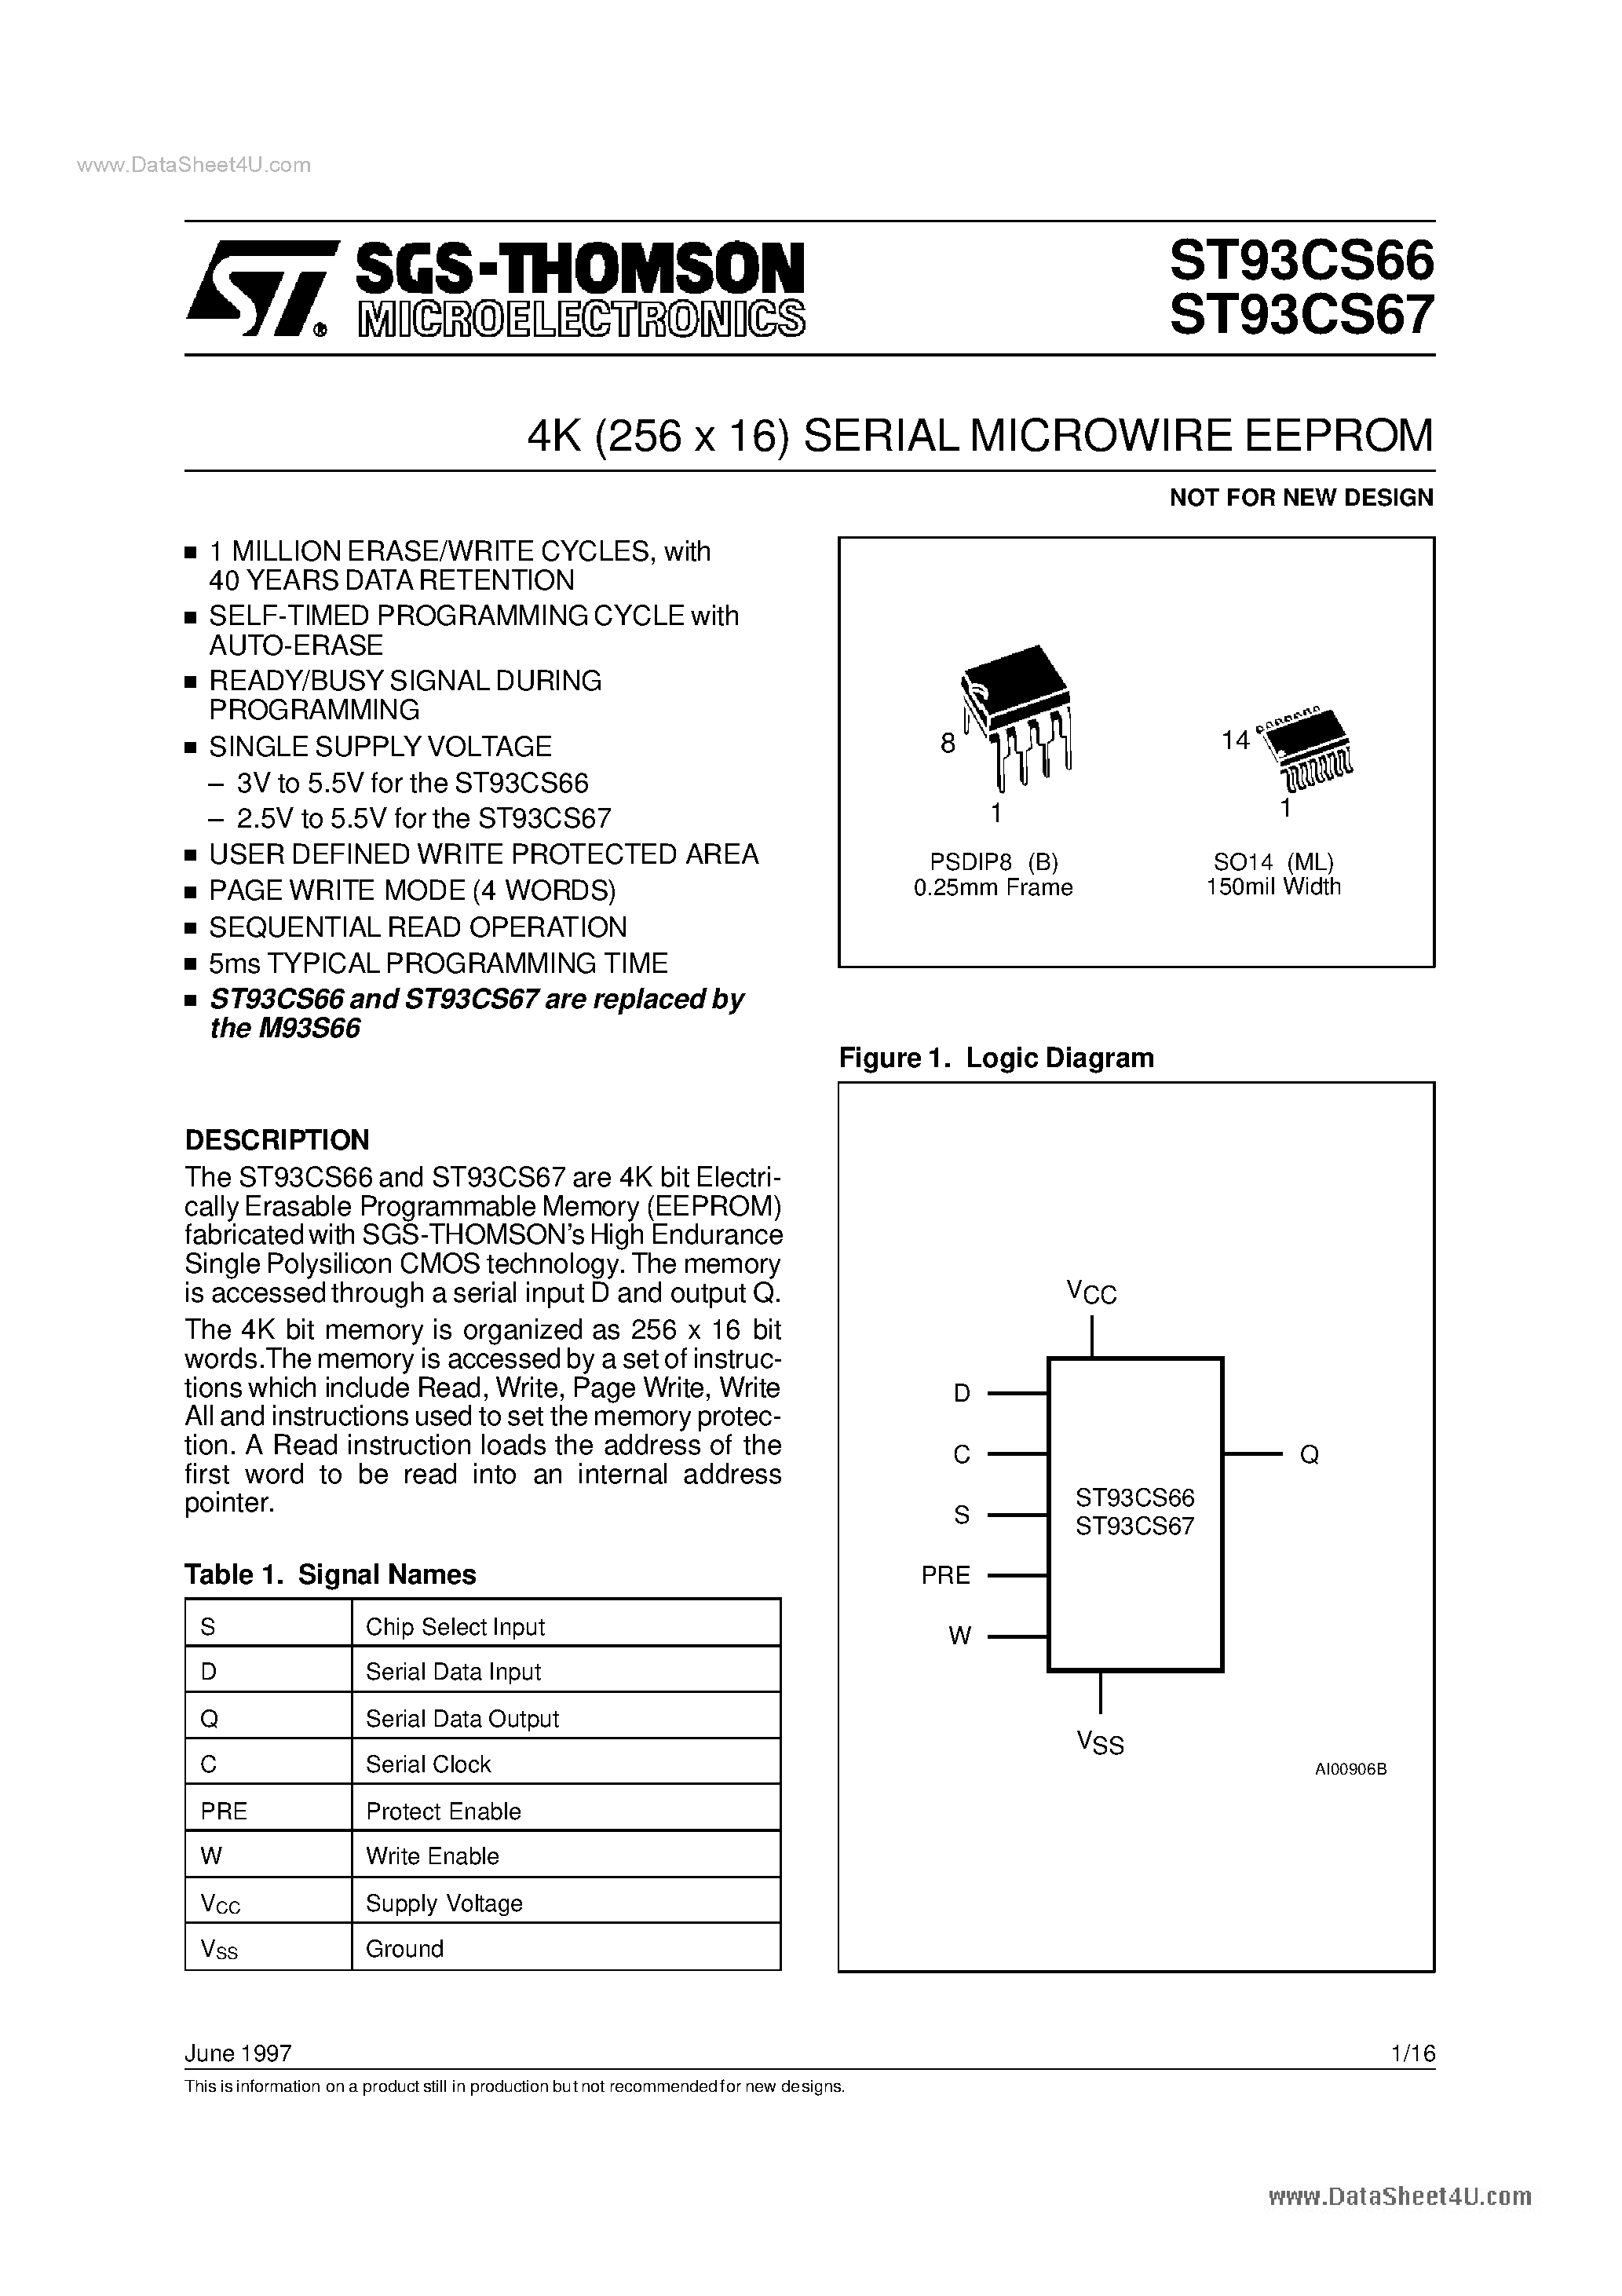 Datasheet ST93CS66 - (ST93CS66 / ST93CS67) 4K 256 x 16 SERIAL MICROWIRE EEPROM page 1